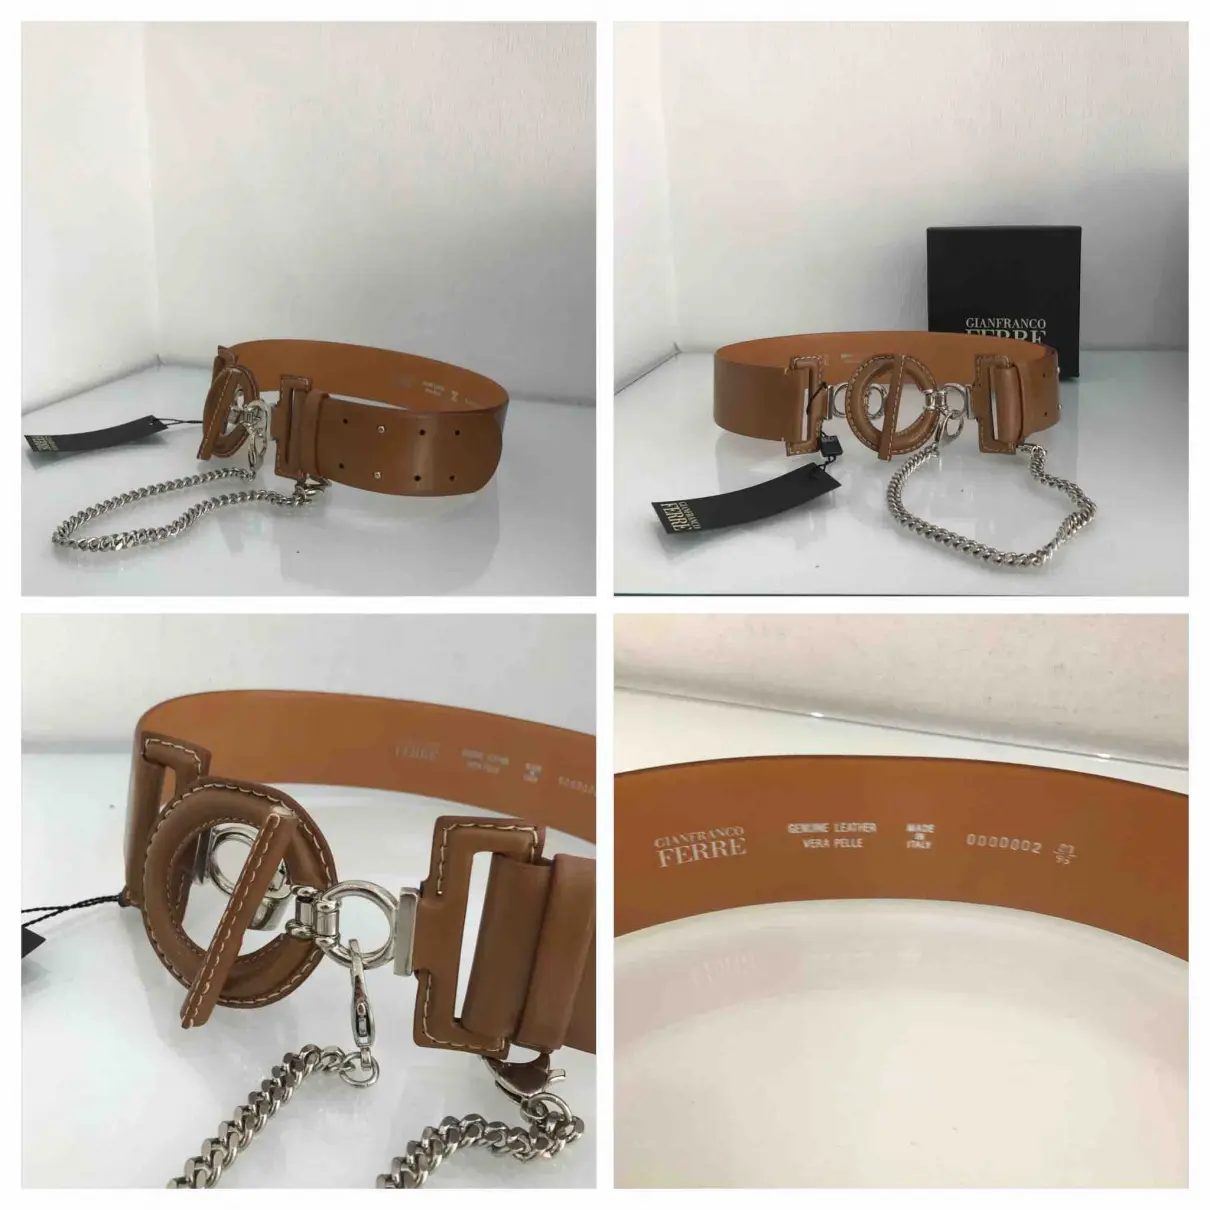 Gianfranco Ferré Leather belt for sale - Vintage